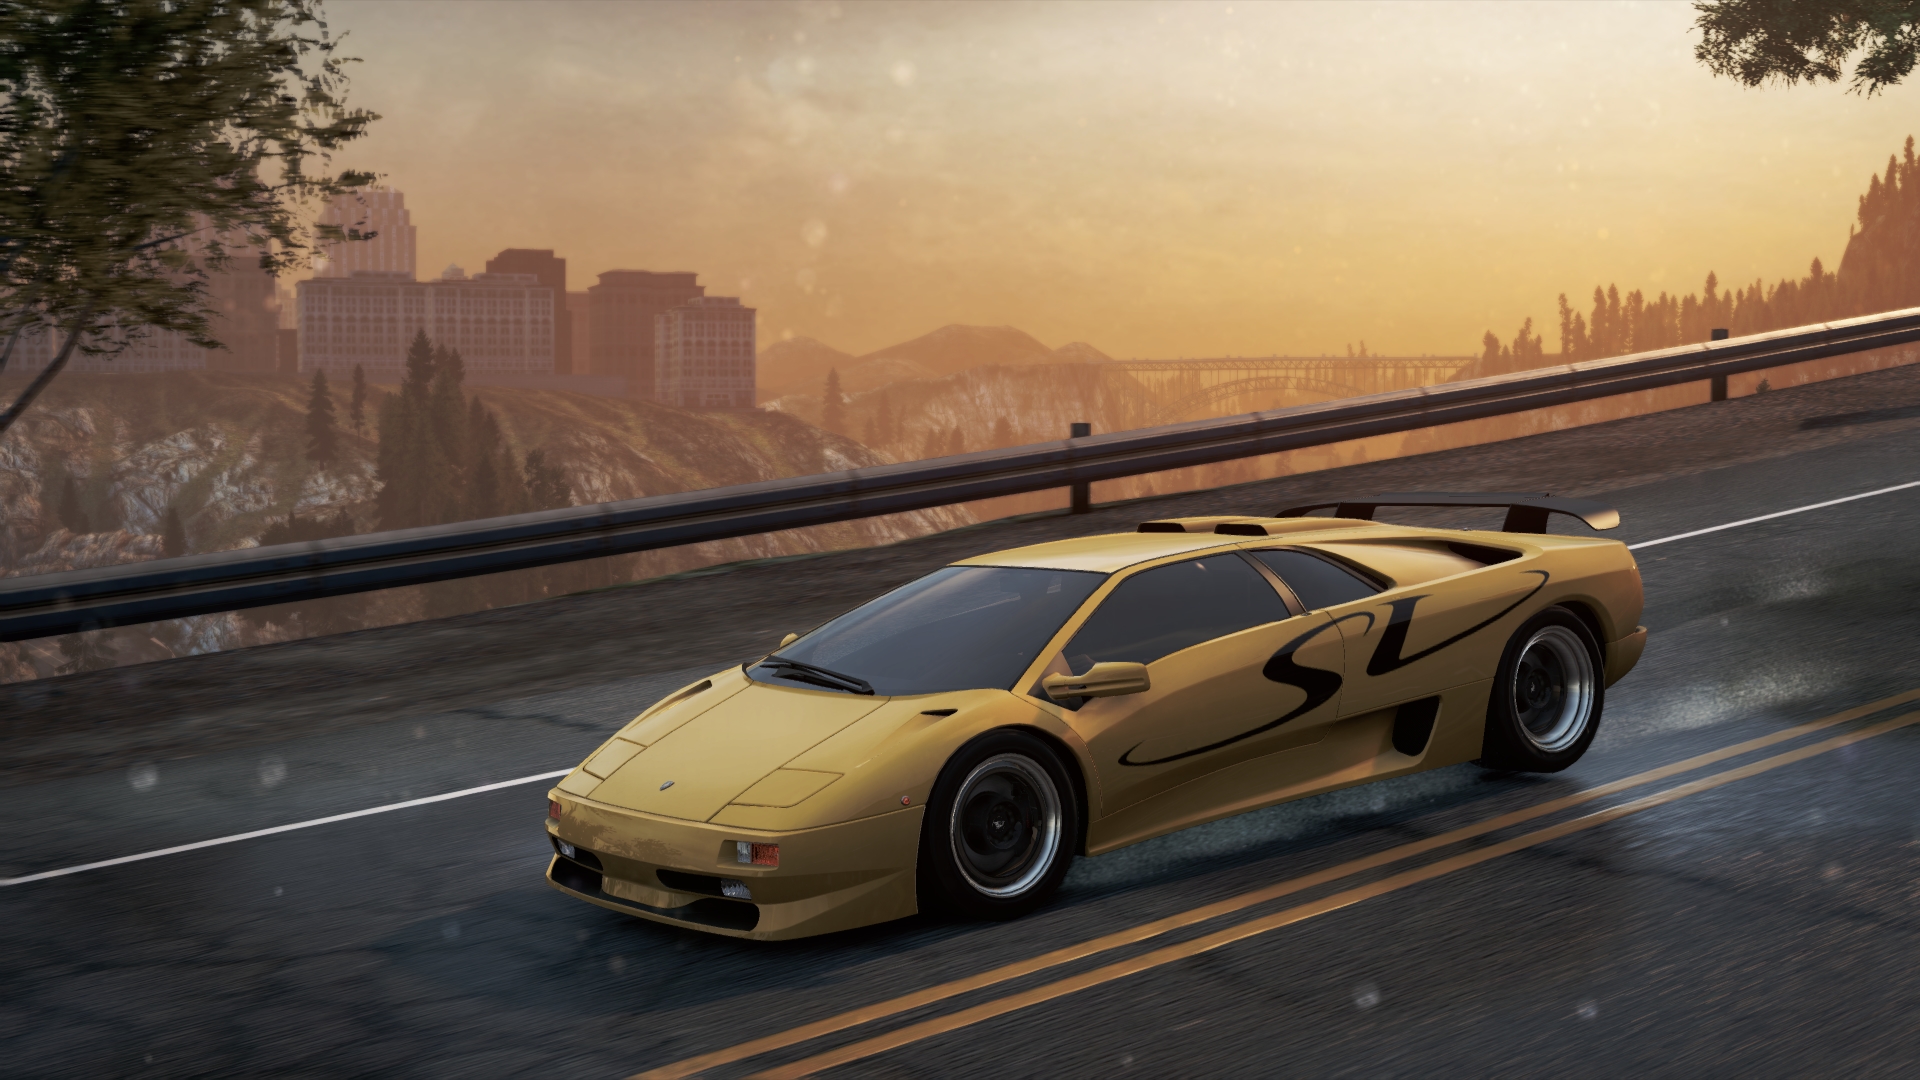 Lamborghini Diablo Sv Need For Speed Wiki Fandom